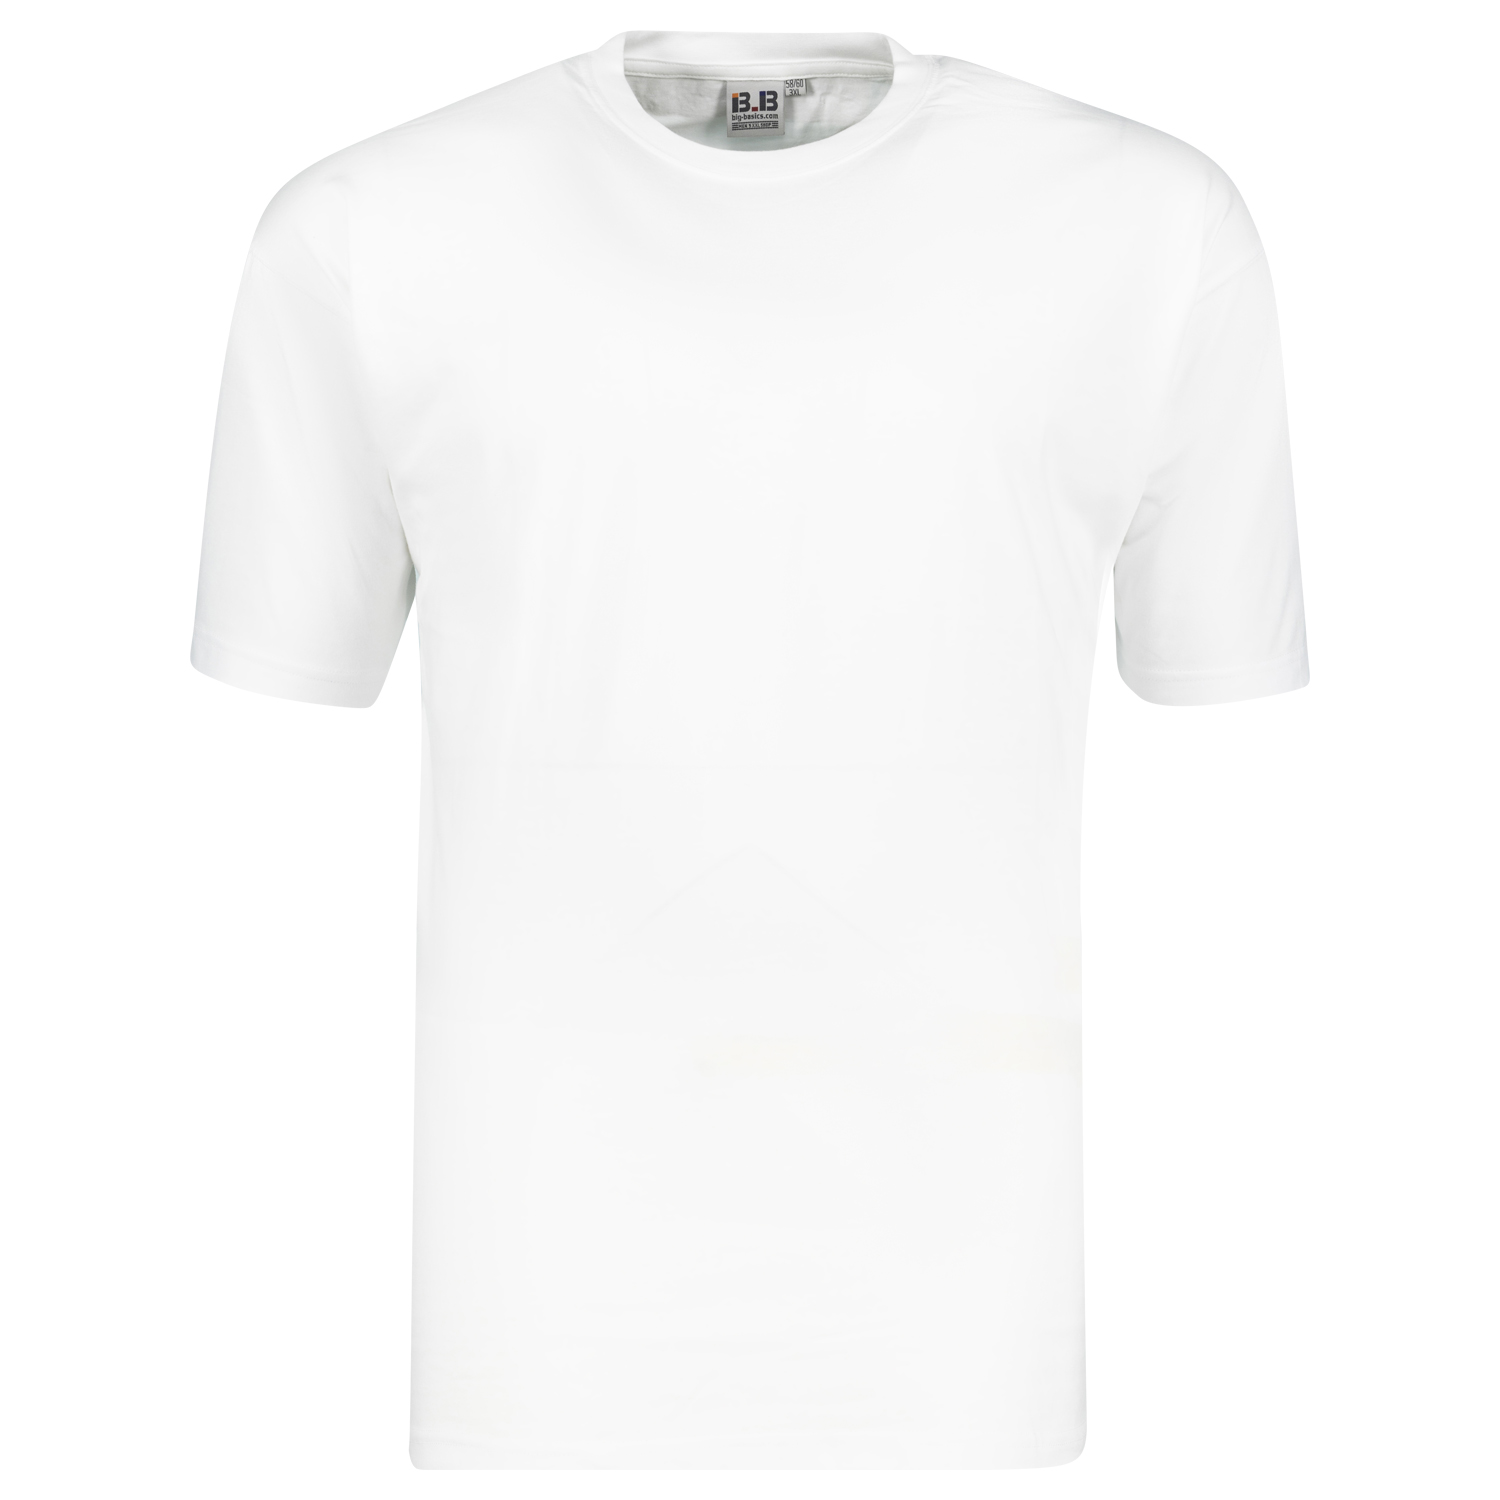 White double pack t-shirt by BigBasics up to kingsize 8XL